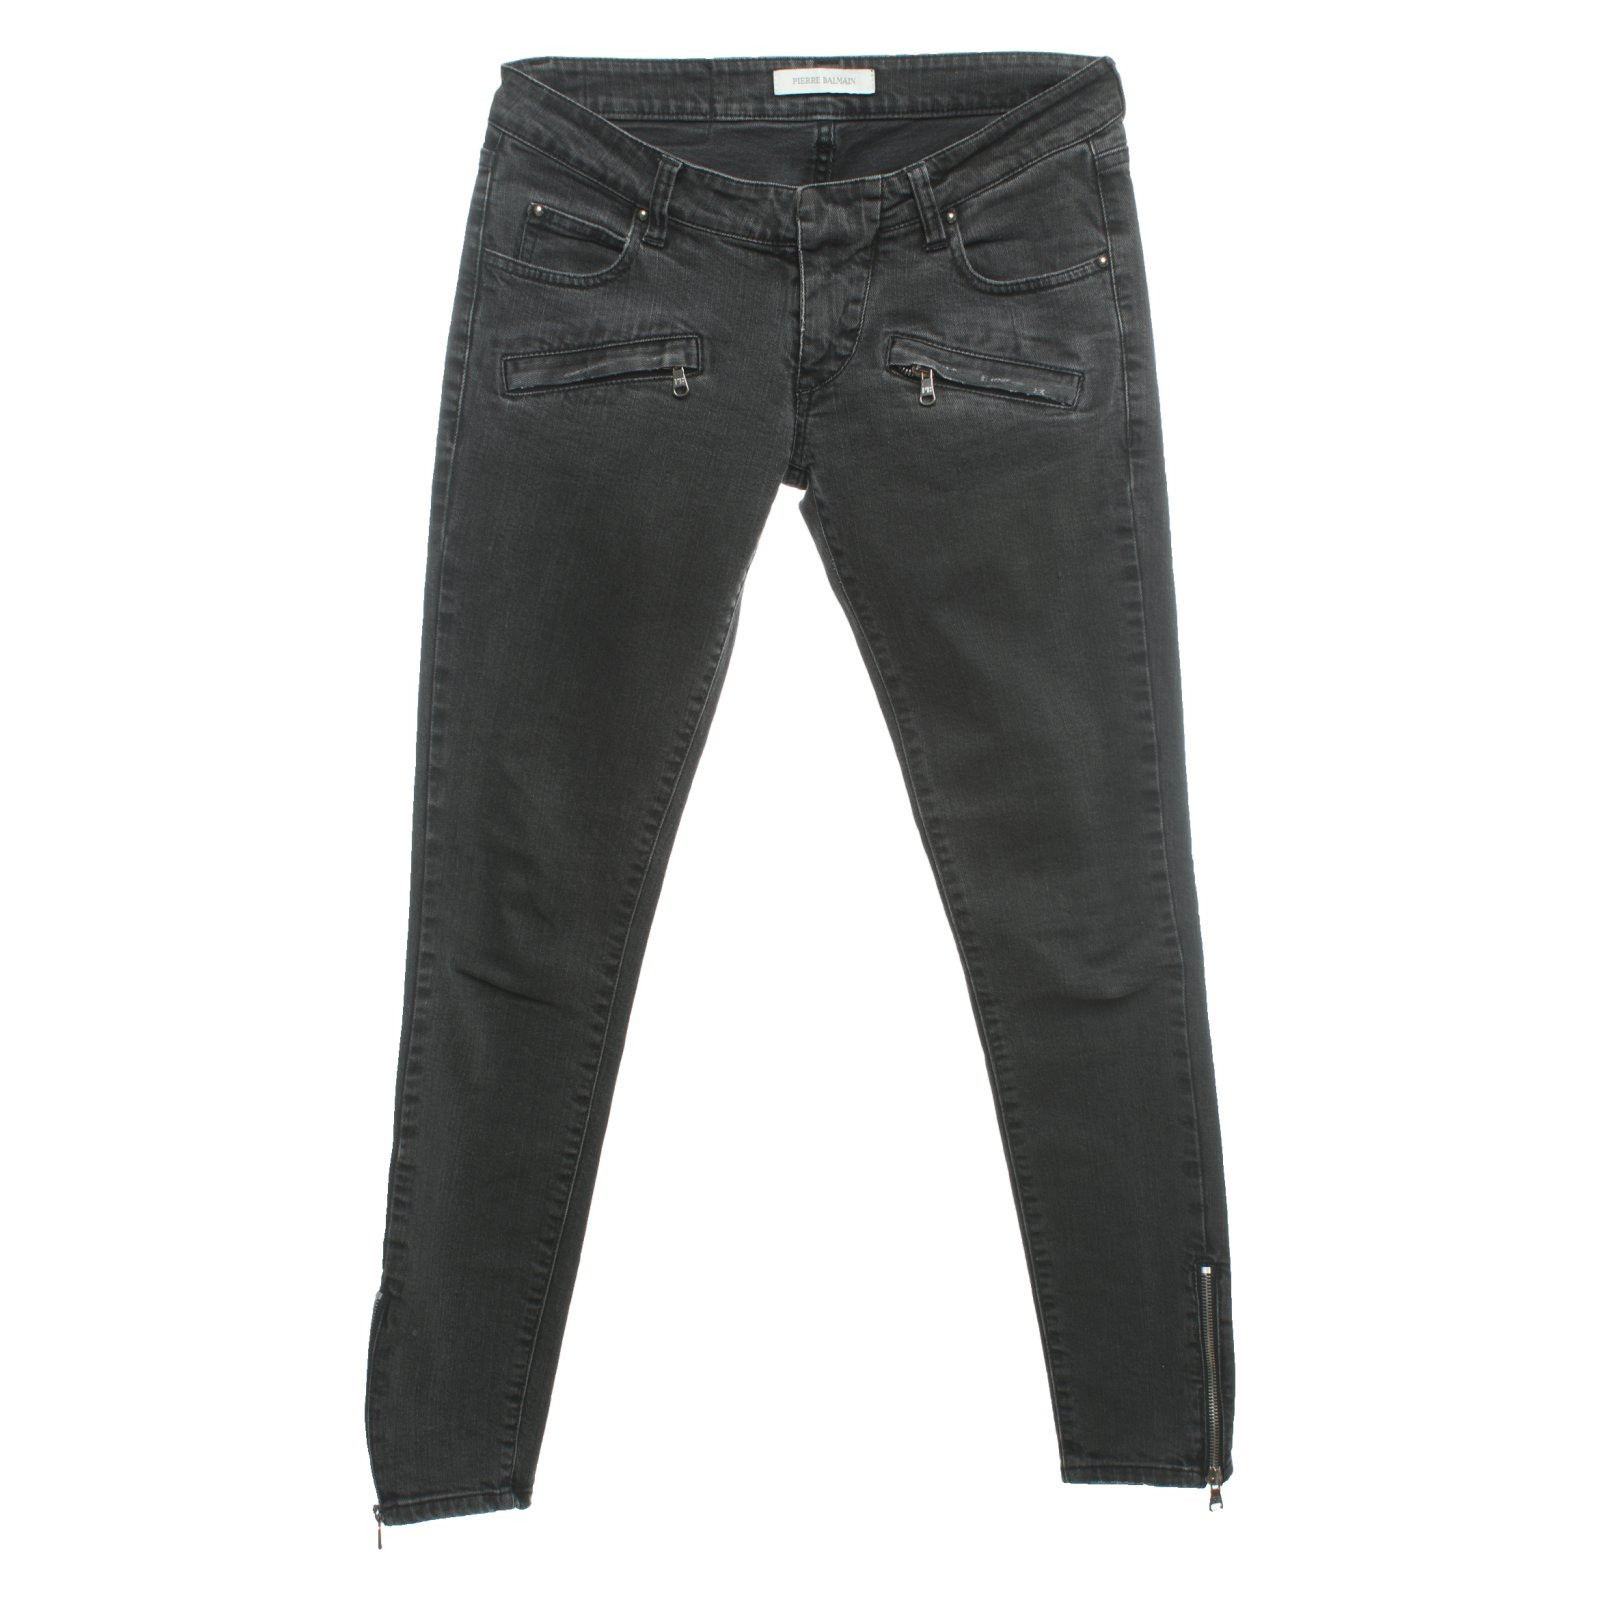 Pierre Balmain Jeans Cotton in Grey - Second Hand Pierre Balmain Jeans  Cotton in Grey buy used for 100€ (4422470)